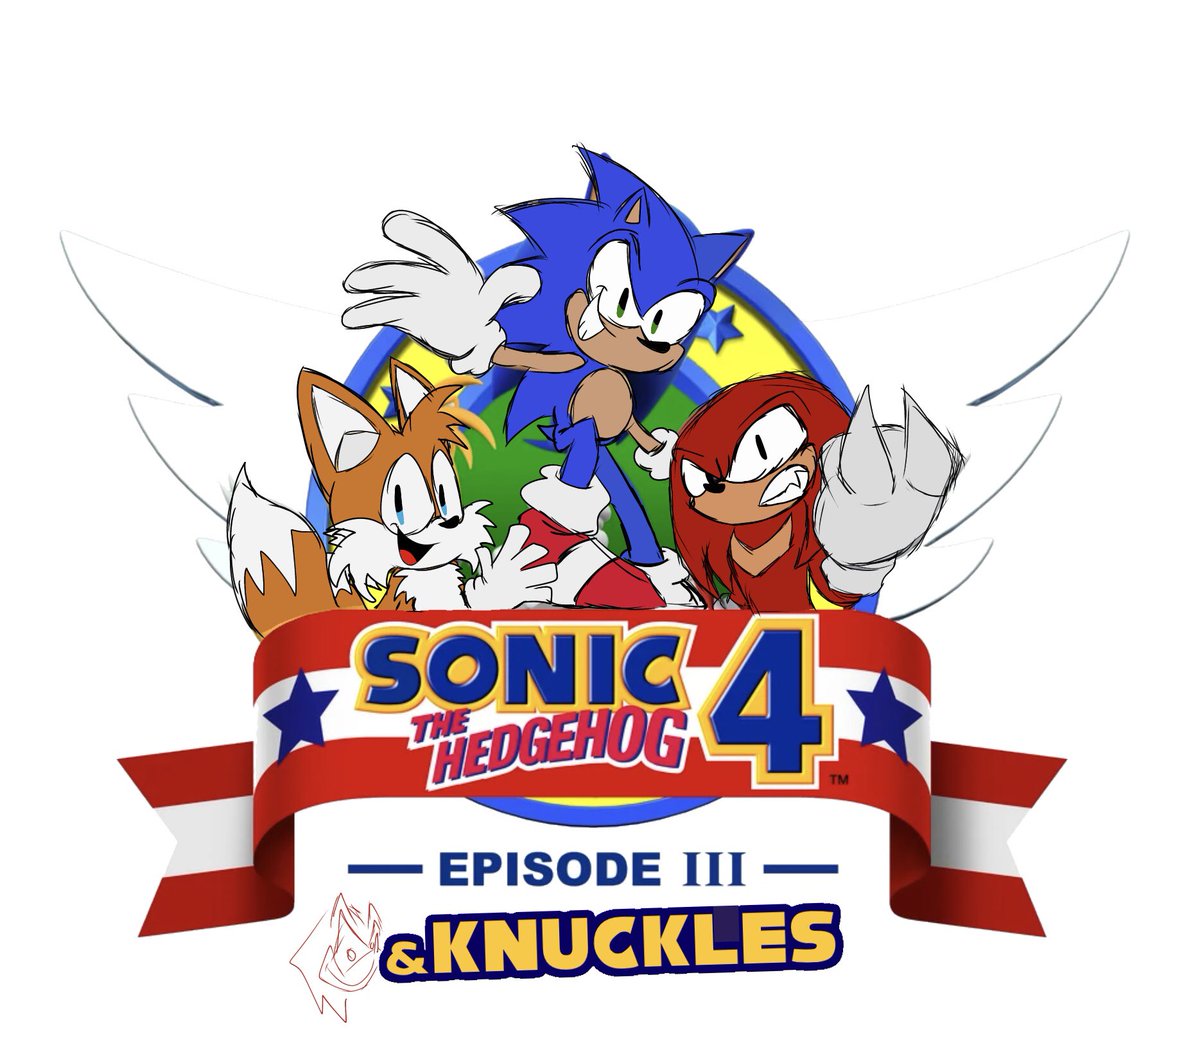 Damn we even got Episode 3!! & Knuckles
#sonicfanart #SonicTheHedegehog #TailsTheFox #Knuckles #Sonic3 #andKnuckles